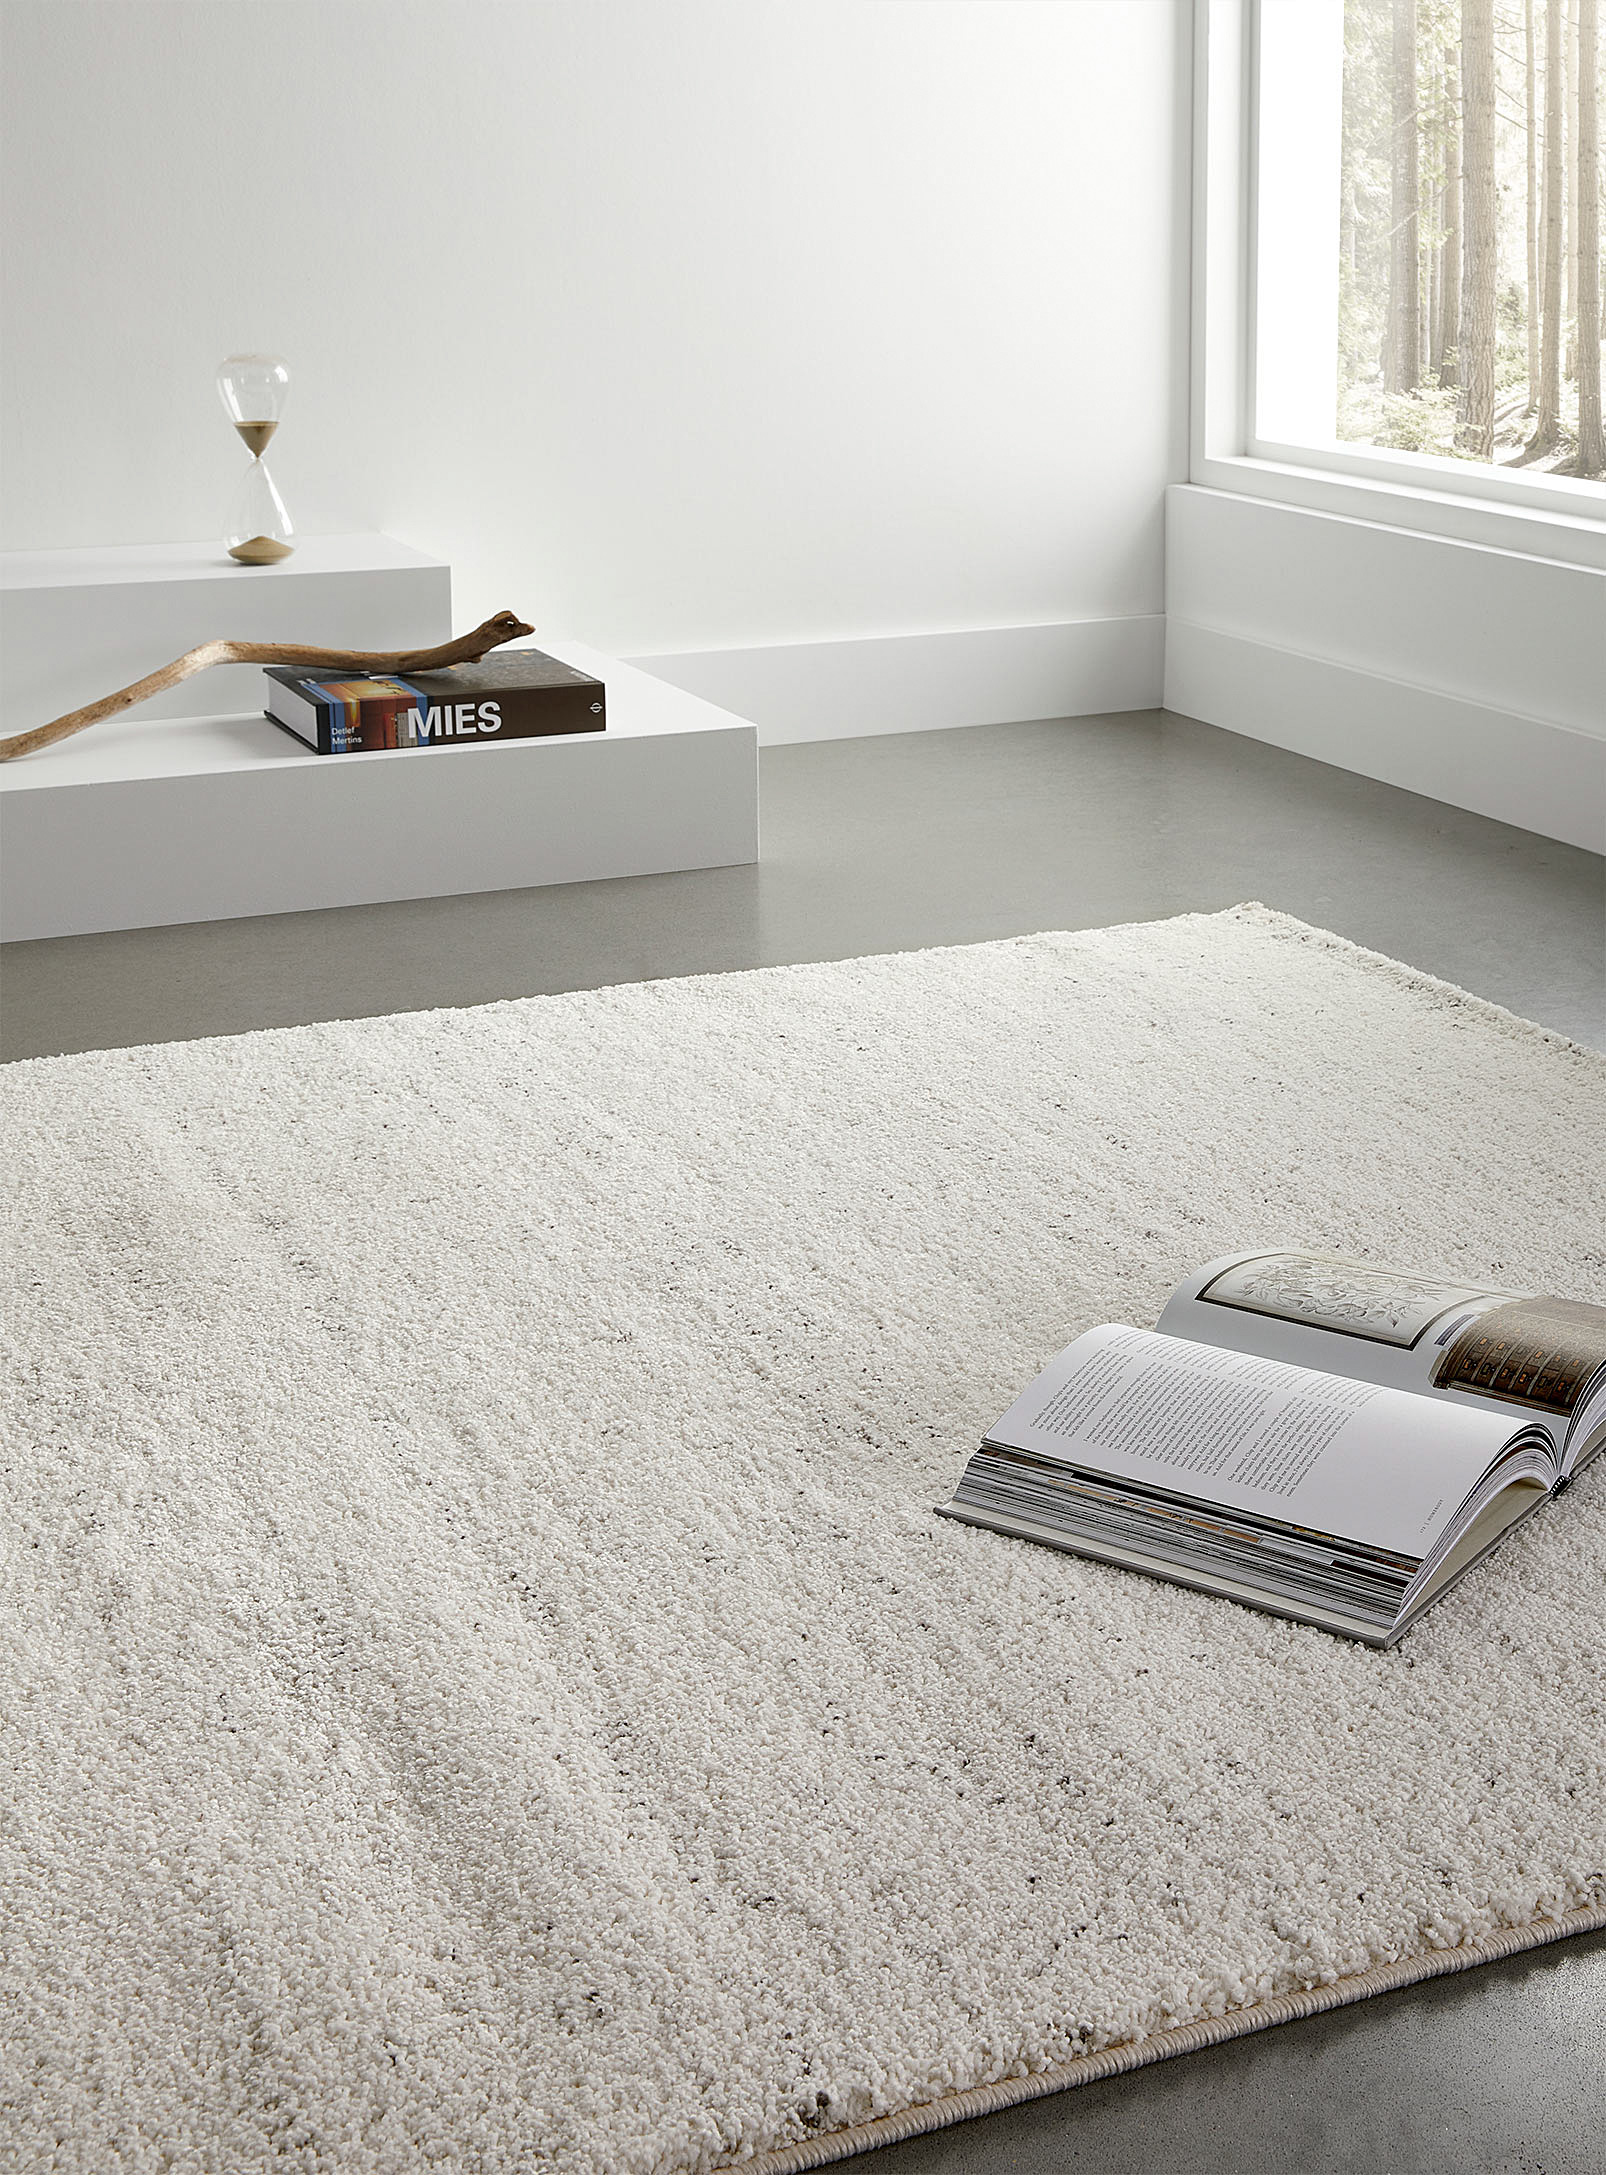 Simons Maison - White sand rug See available sizes